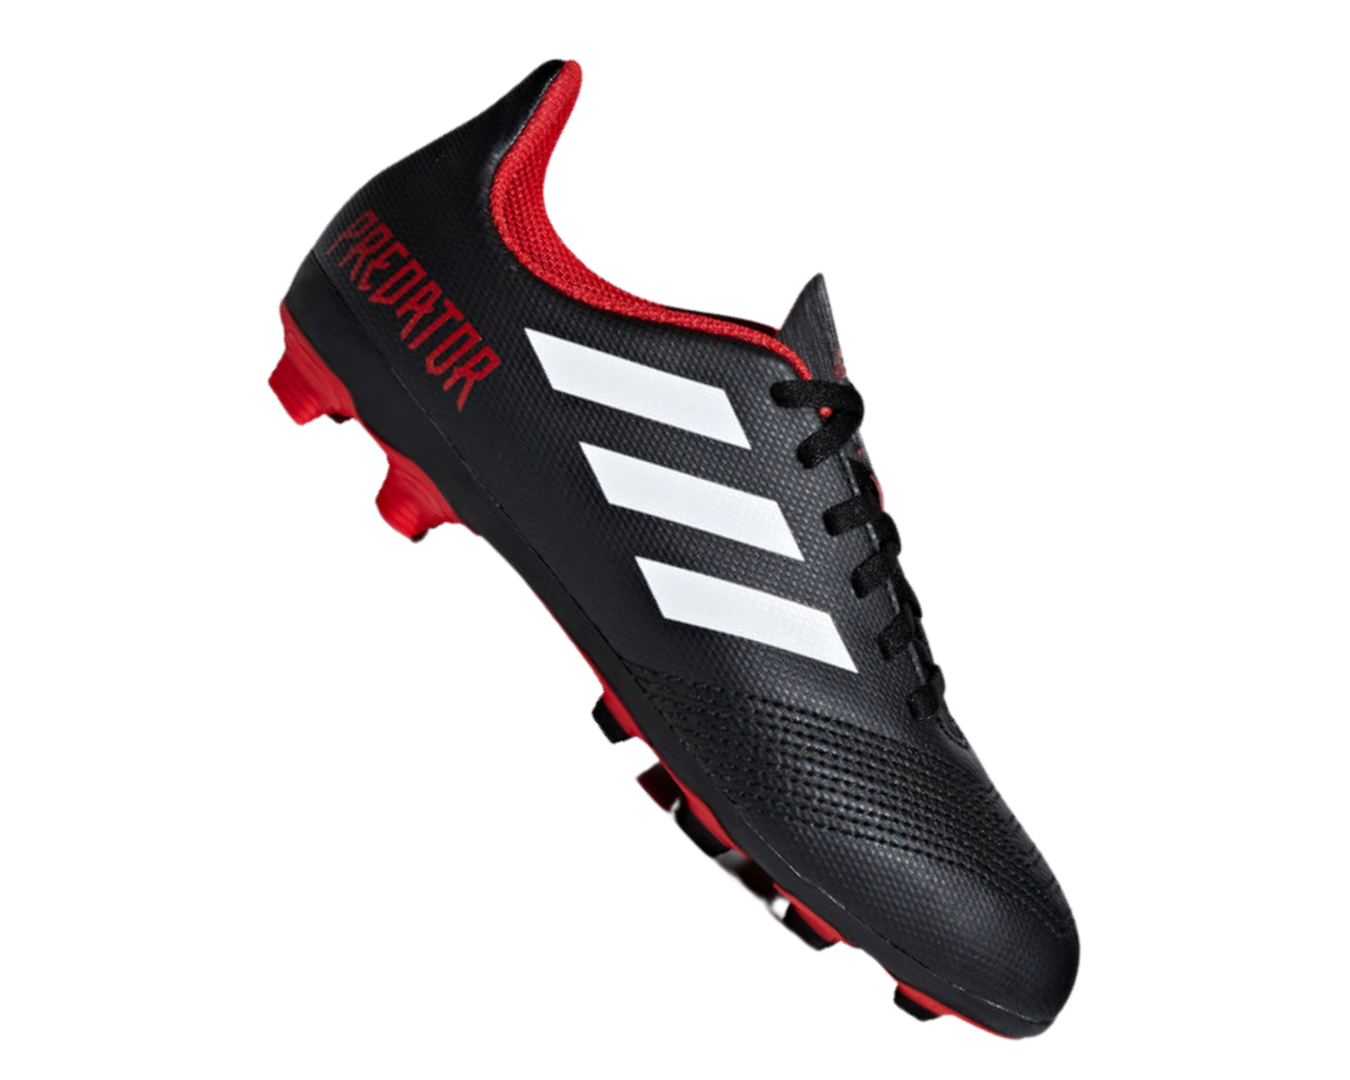 adidas predator 18.4 junior fg football boots